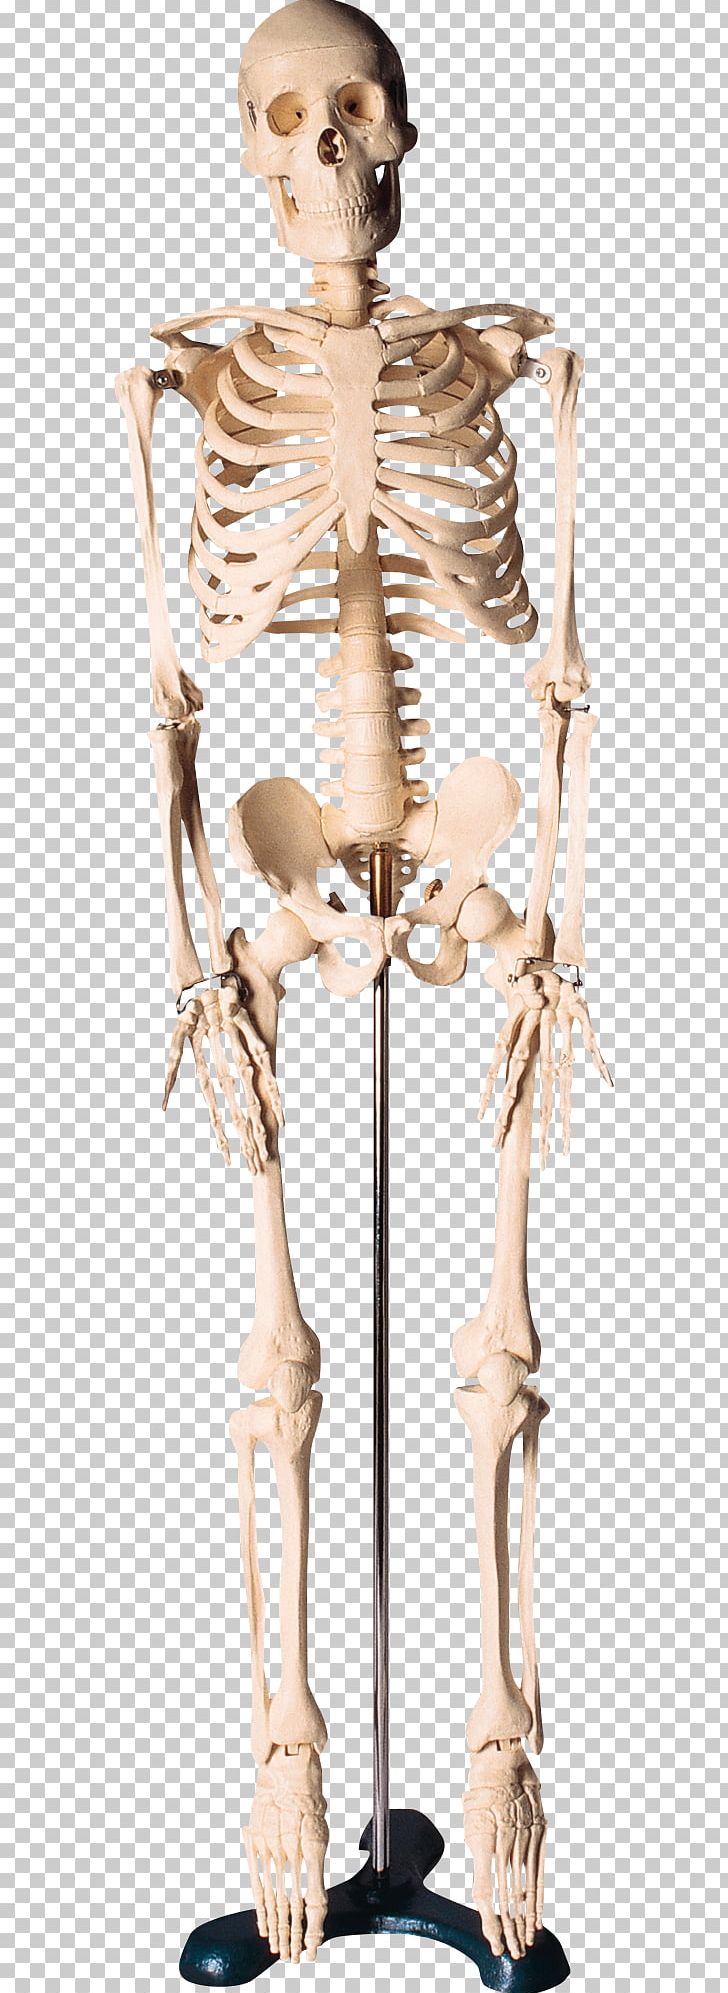 Human Skeleton Bone PNG, Clipart, Bone, Classical Sculpture, Download, Encapsulated Postscript, Fantasy Free PNG Download